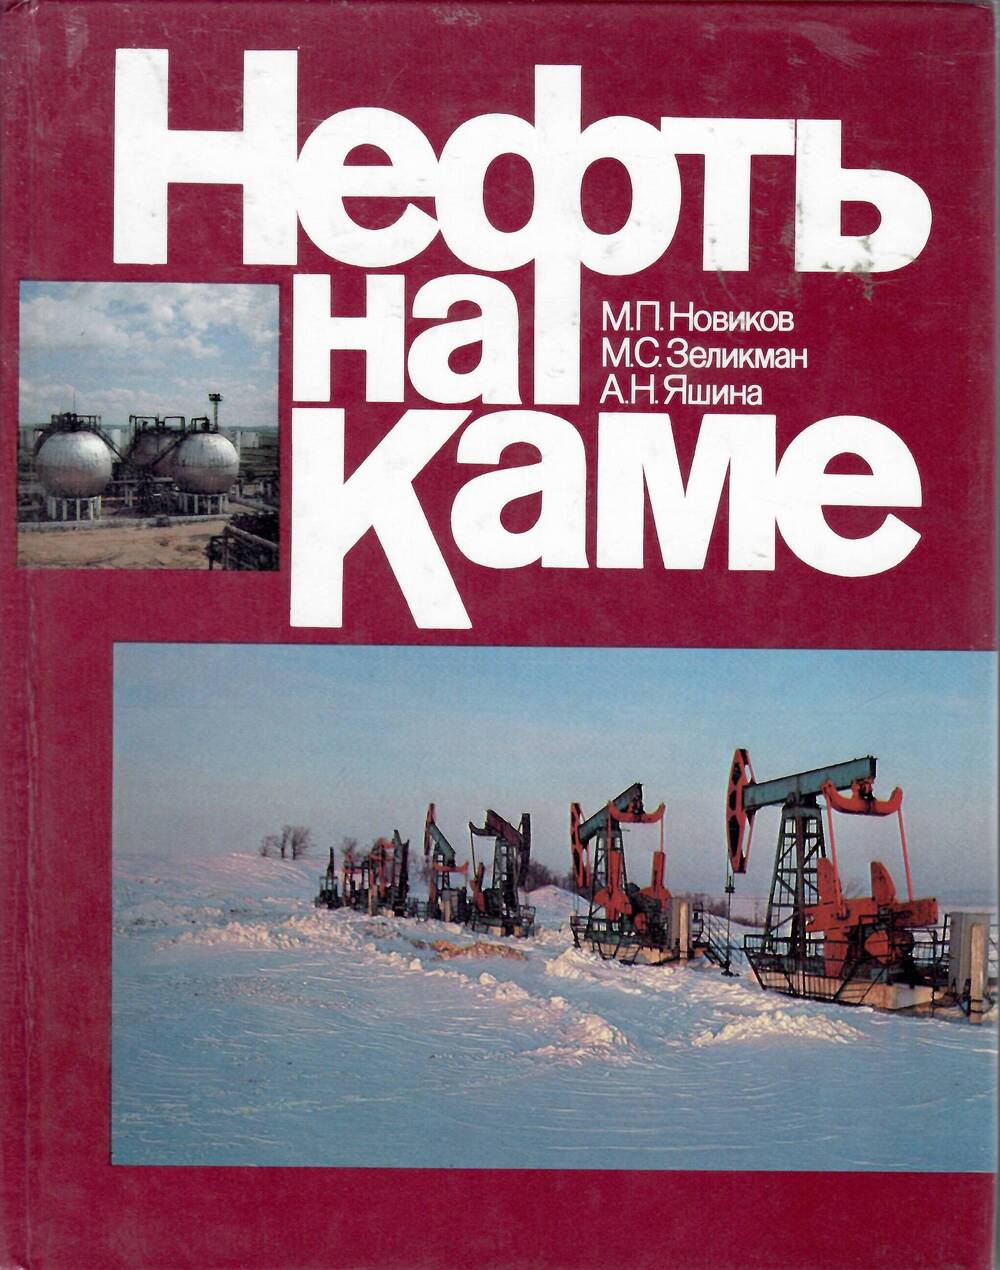 Новиков М.П., Зеликман М.С..,Яшина А.К.. Нефть на Каме. - : Недра, 1988.- 221с. ил.